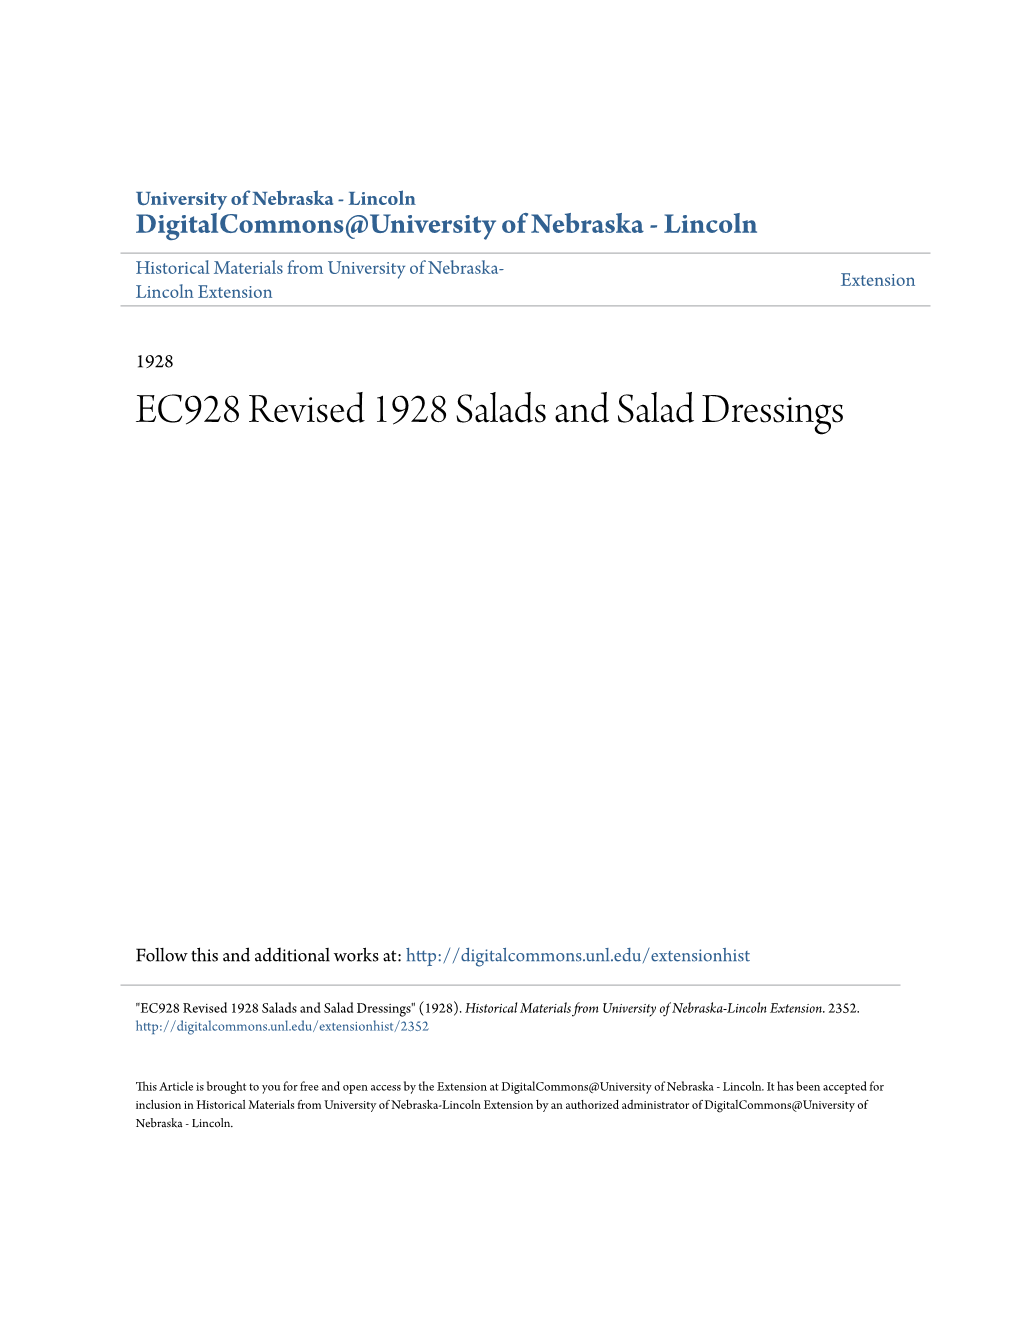 EC928 Revised 1928 Salads and Salad Dressings